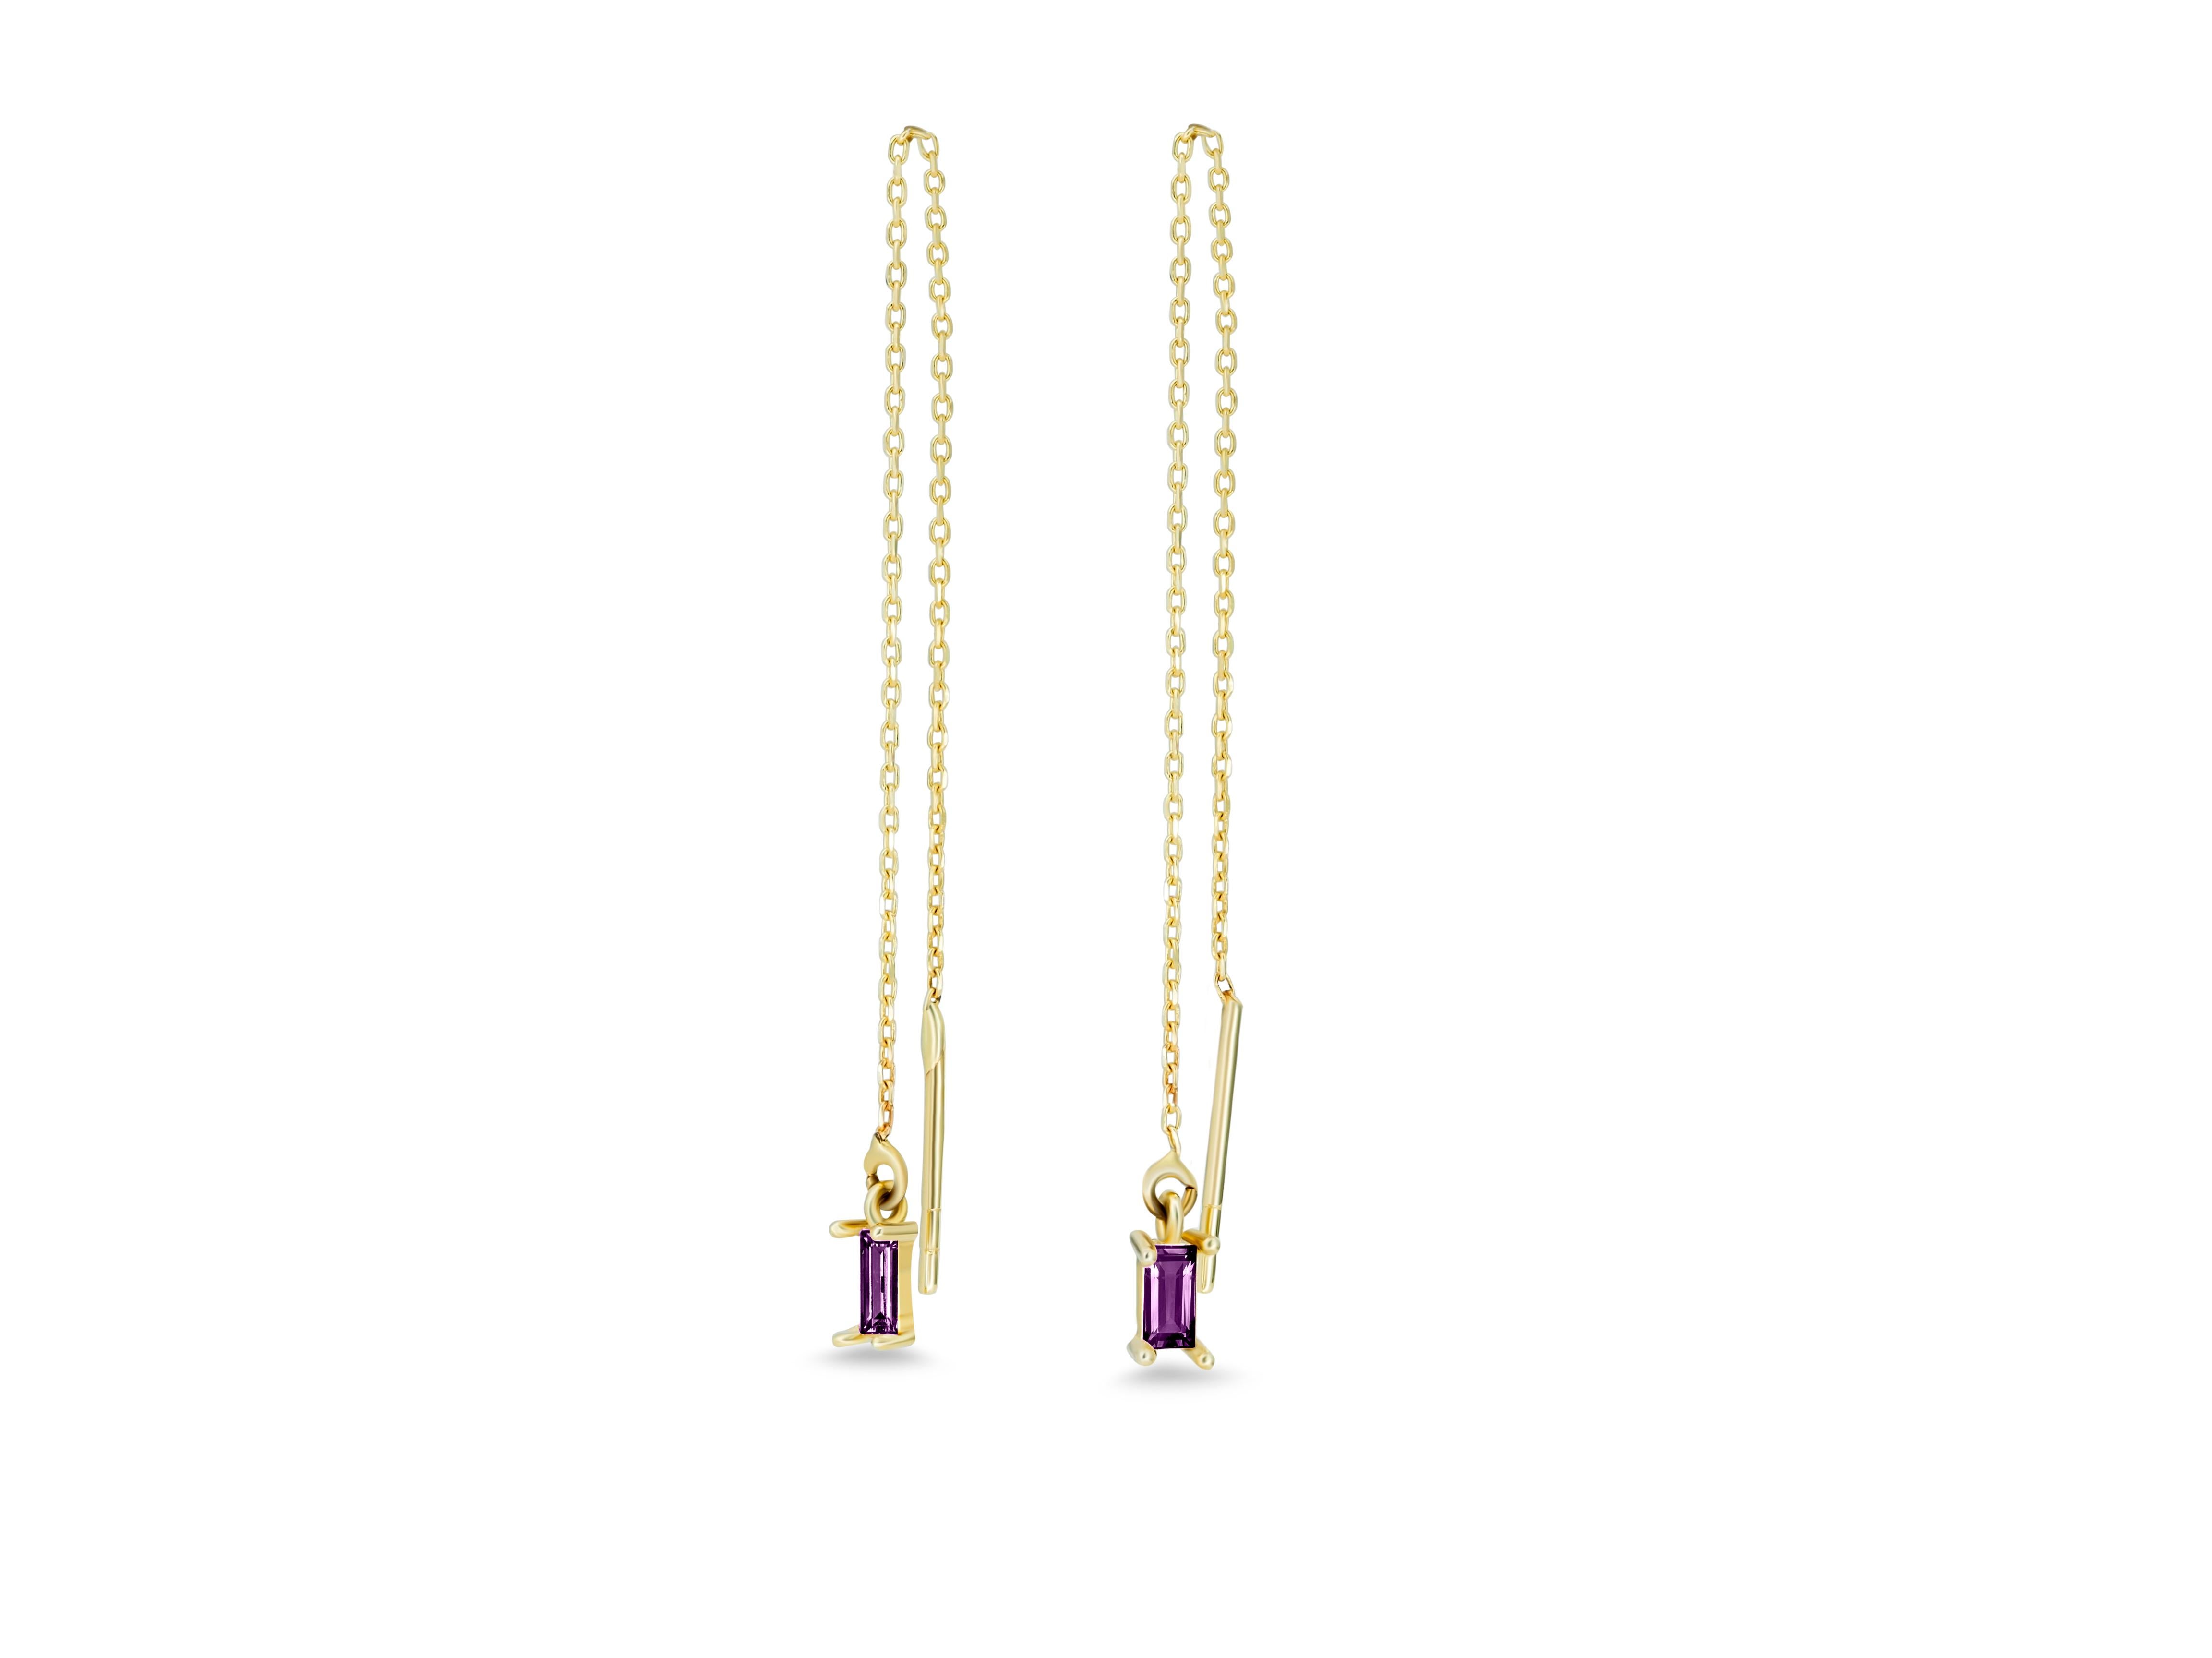 Women's 14k Solid Gold Drop Earrings with Amethysts, Chain Gold Earrings For Sale